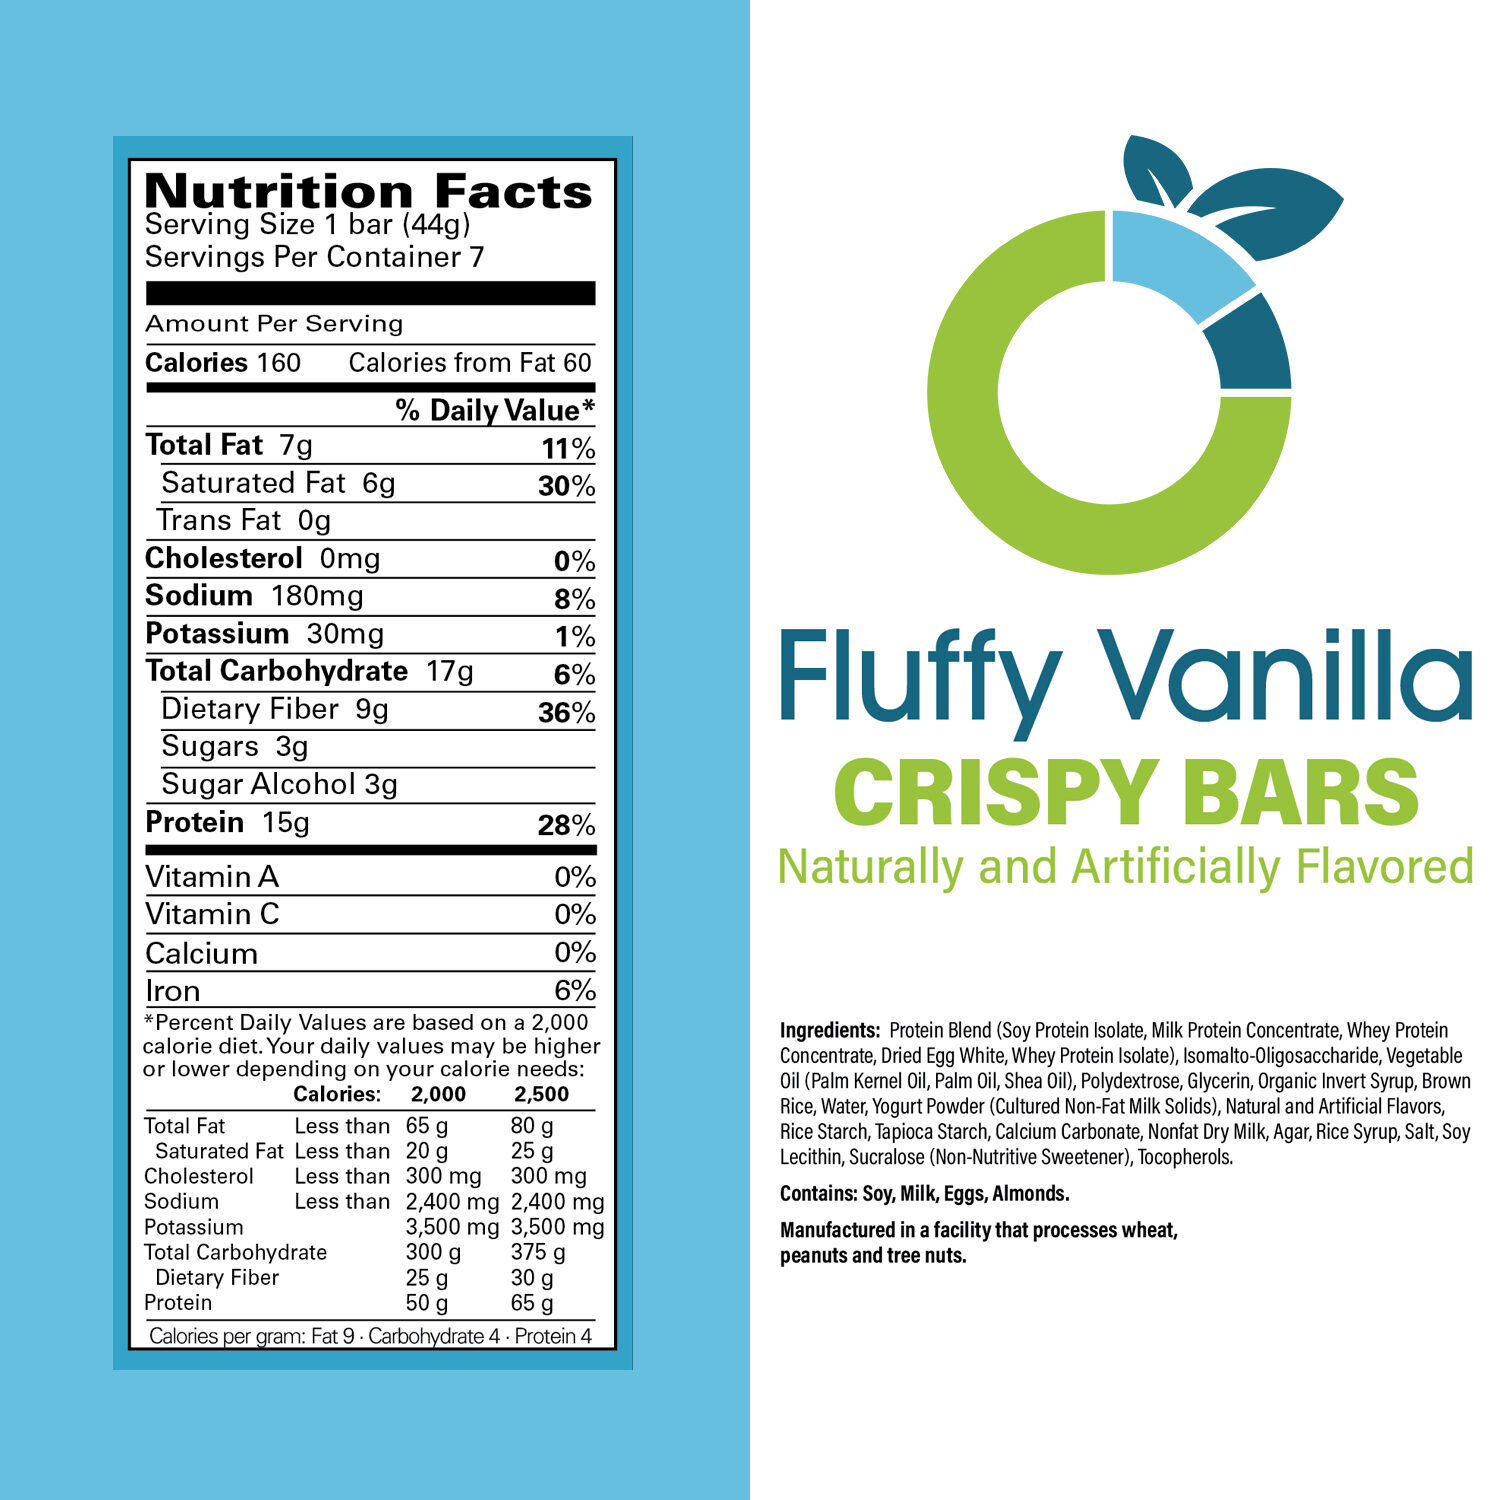 Fluffy-Vanilla-Crispy-Bars-Panel_05dc05dc0_78757